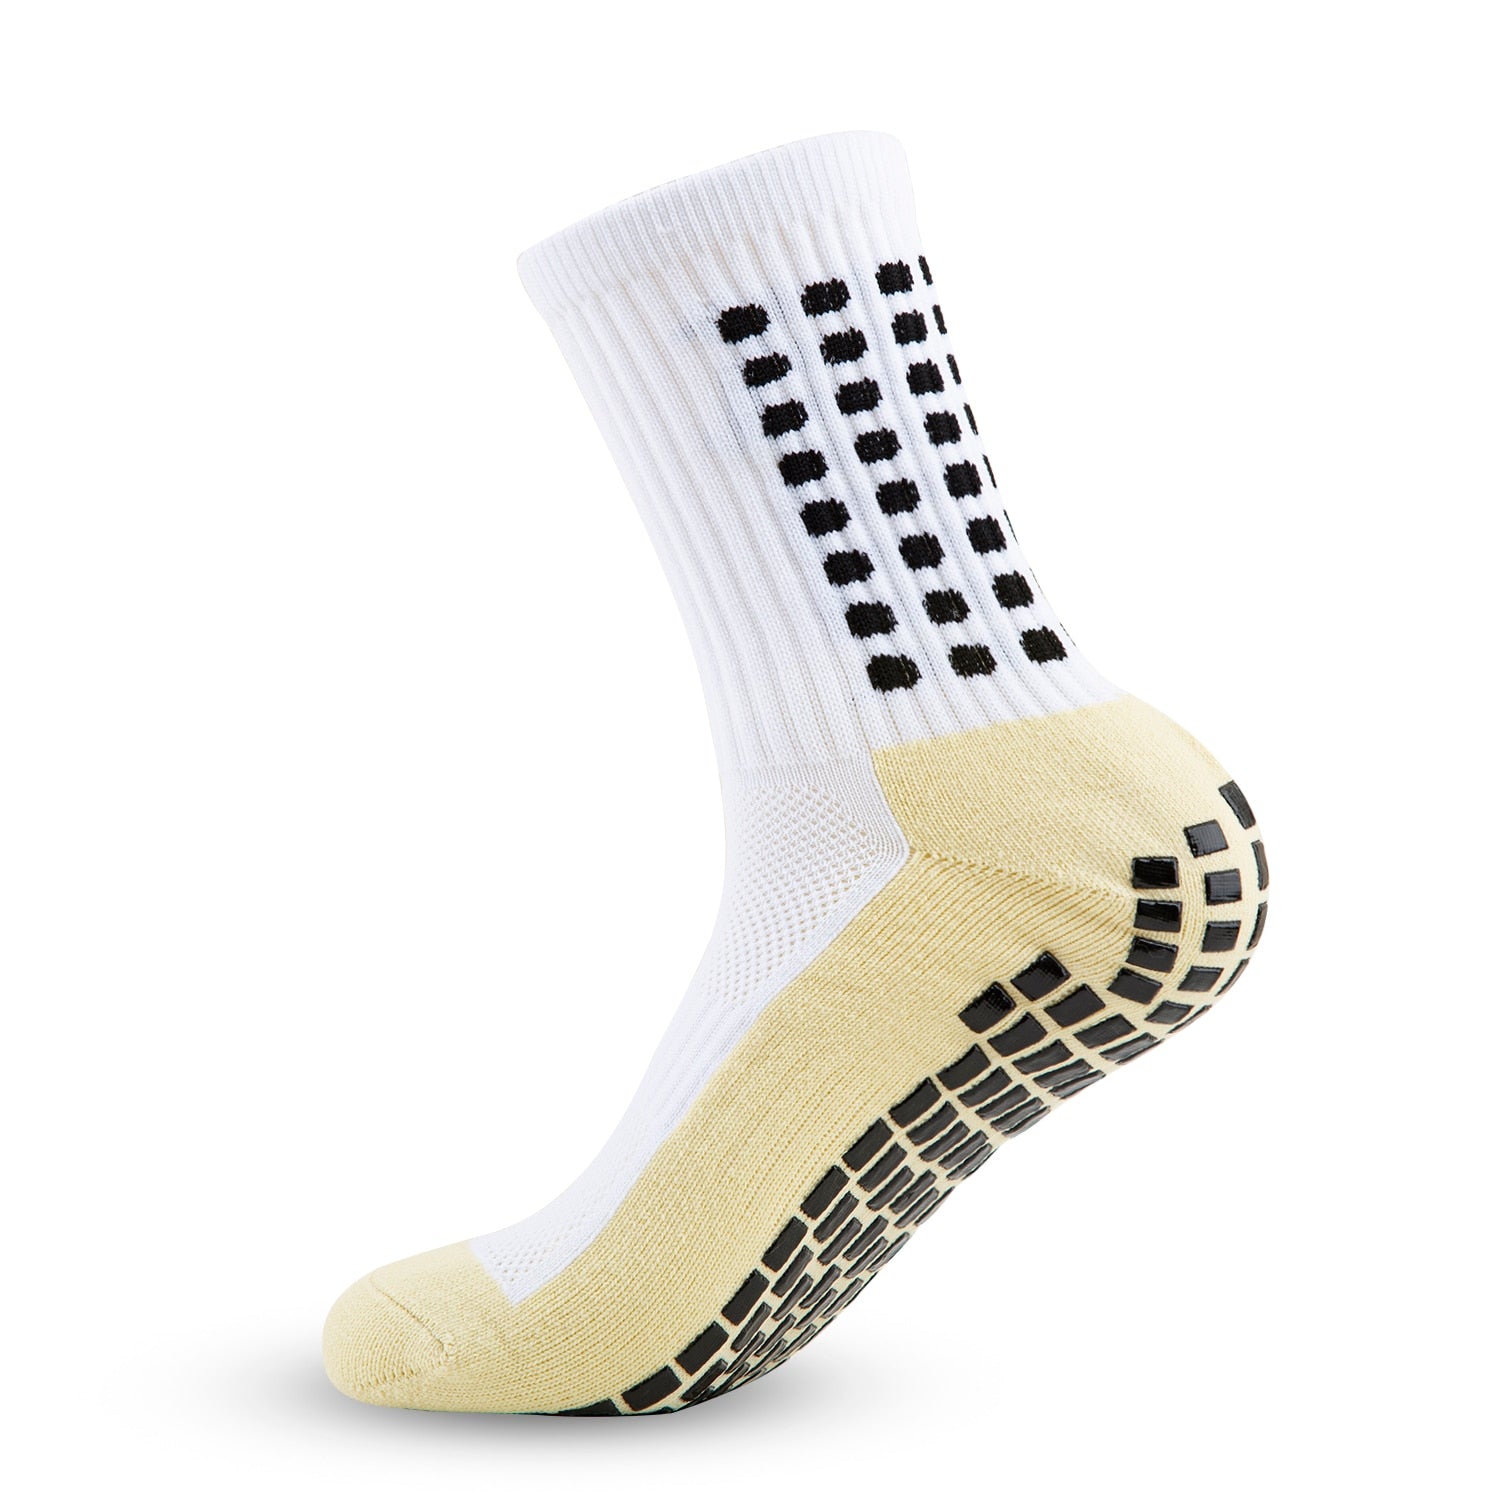 Anti-Slip Soccer Socks - Grip Football and Yoga Socks for Men and Women | Outdoor Sport Essential